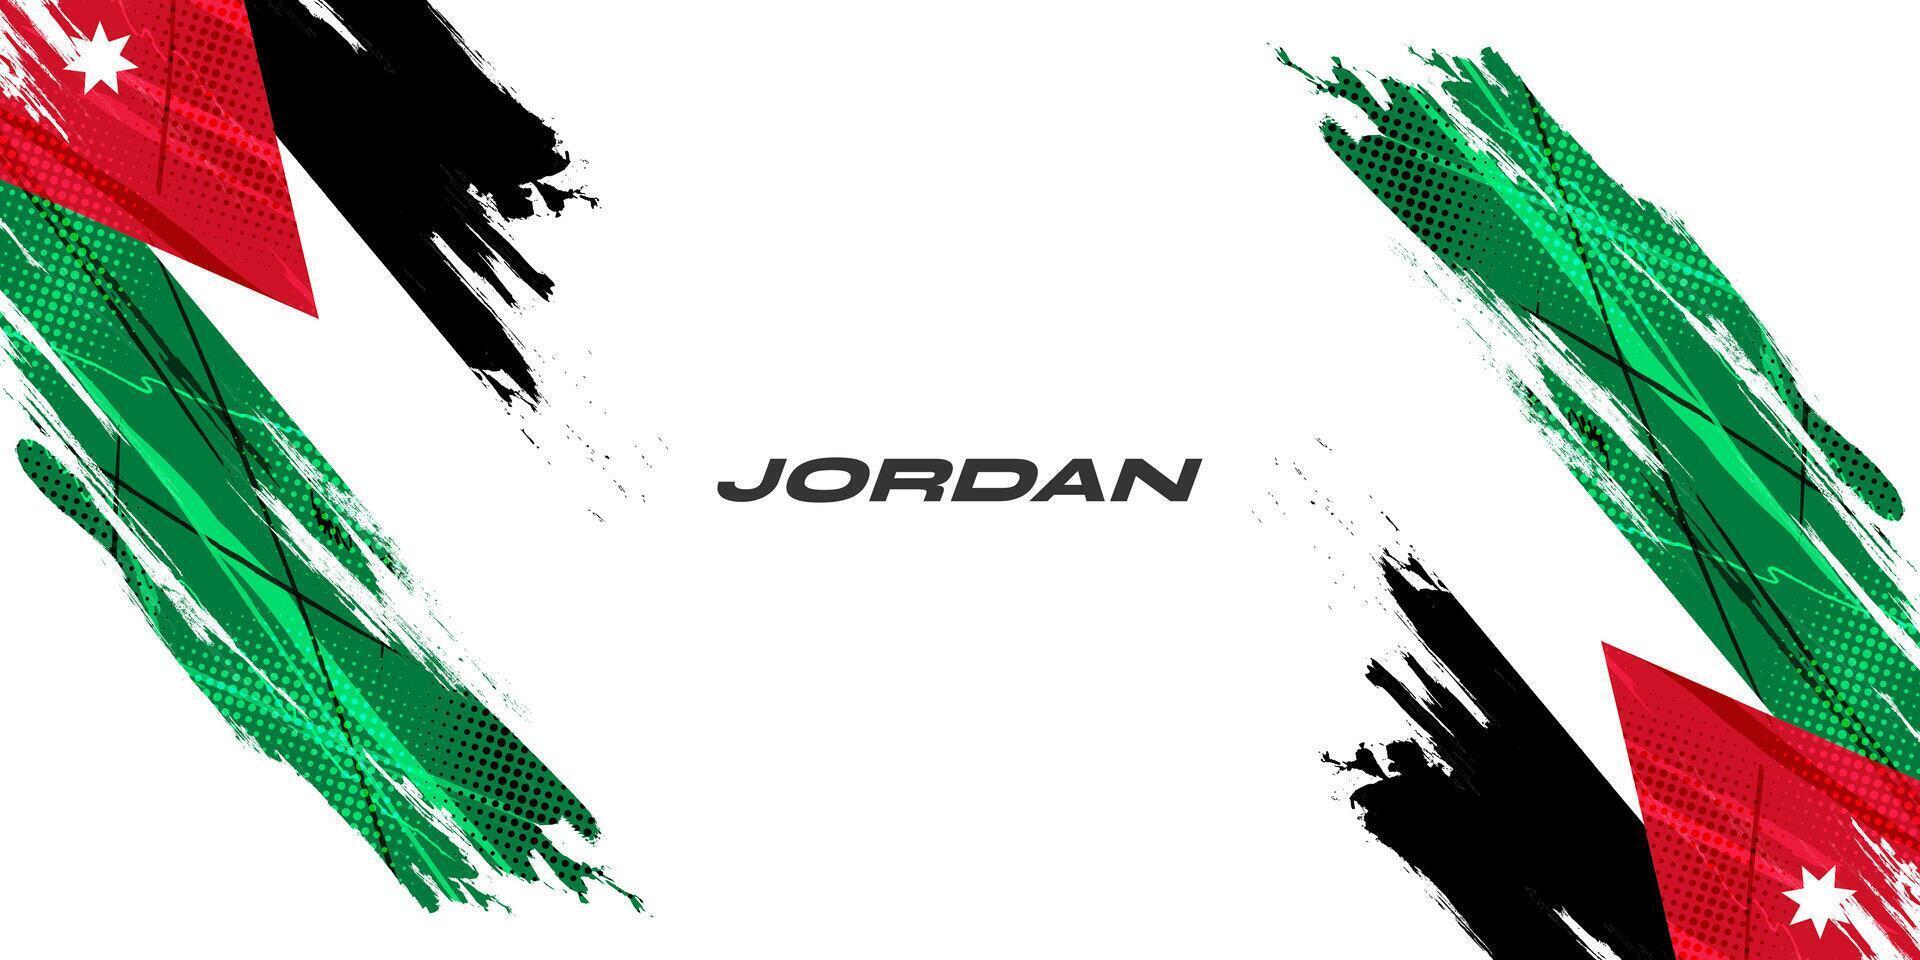 Jordán bandera en cepillo pintar estilo con trama de semitonos efecto. nacional bandera de Jordán con grunge cepillo concepto vector